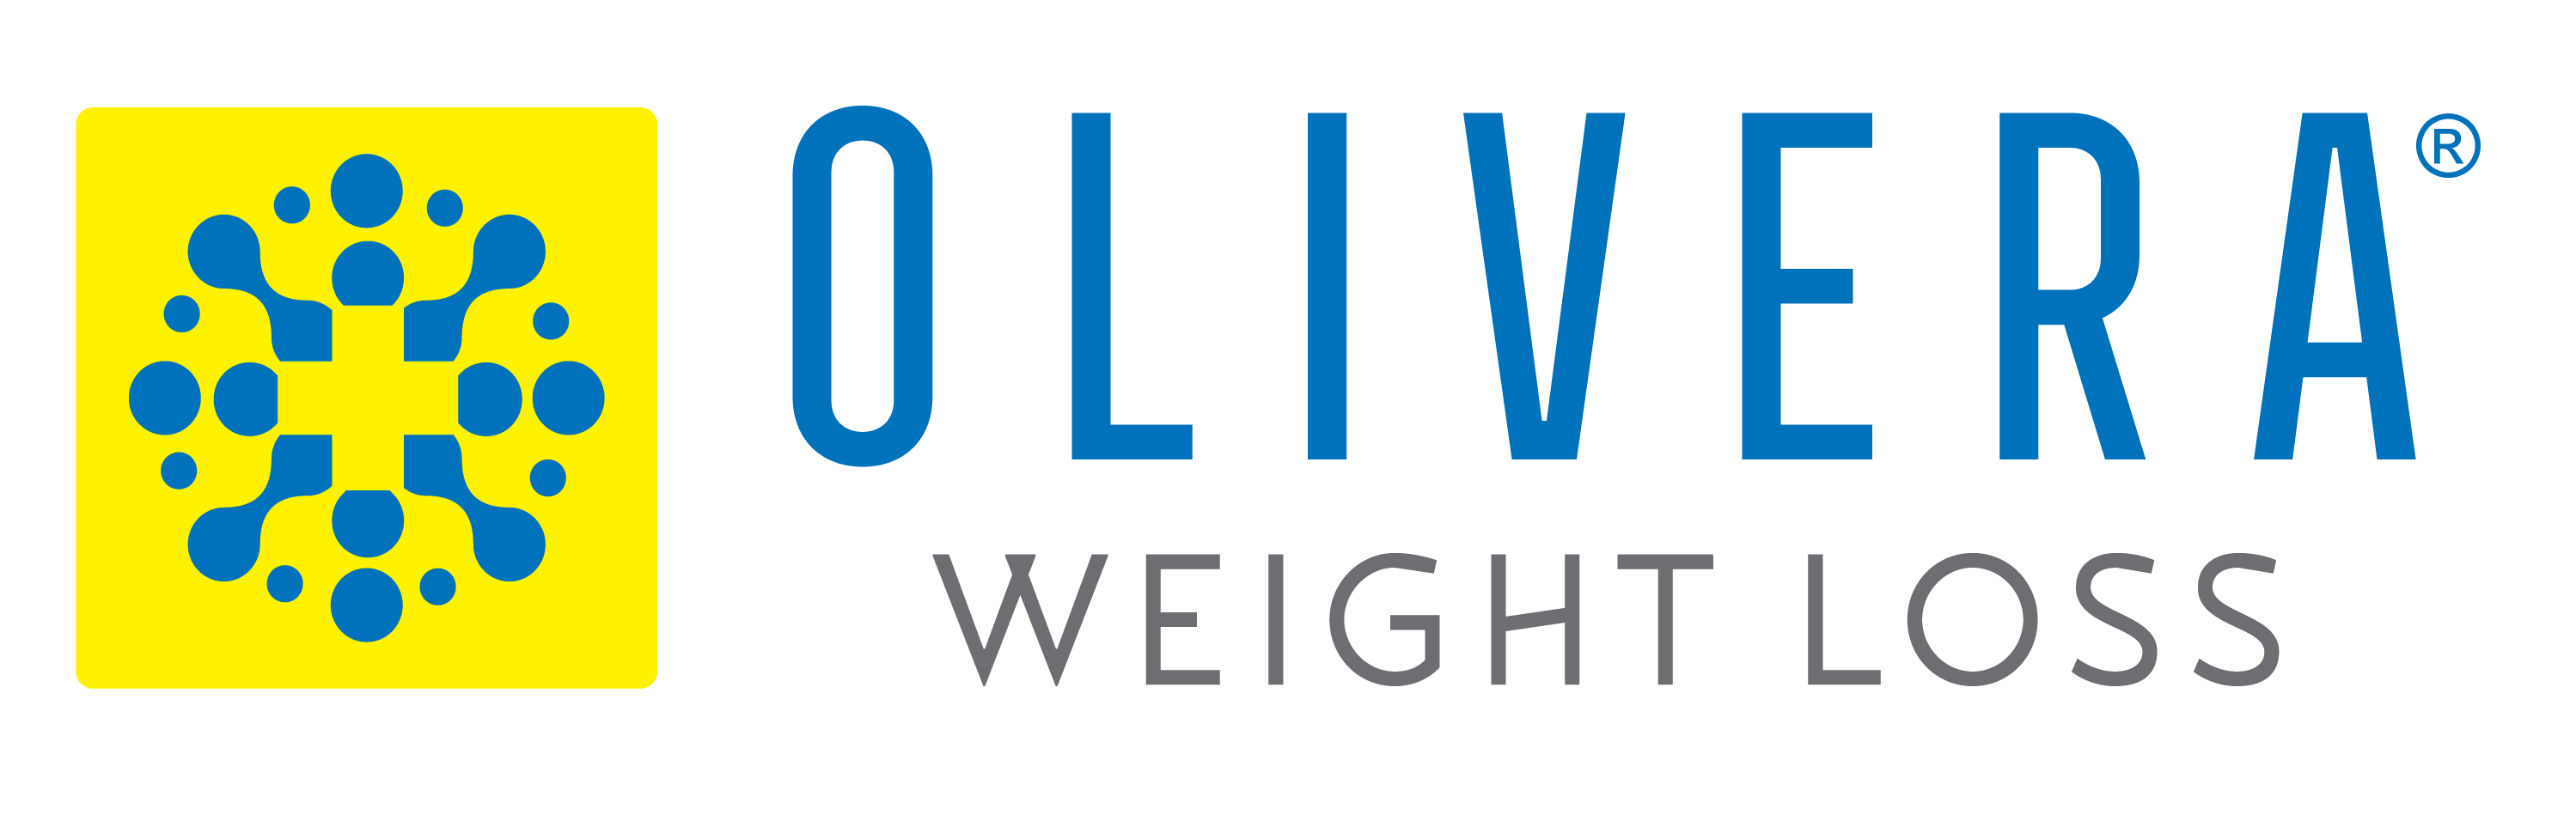 Olivera Weight Loss Logo